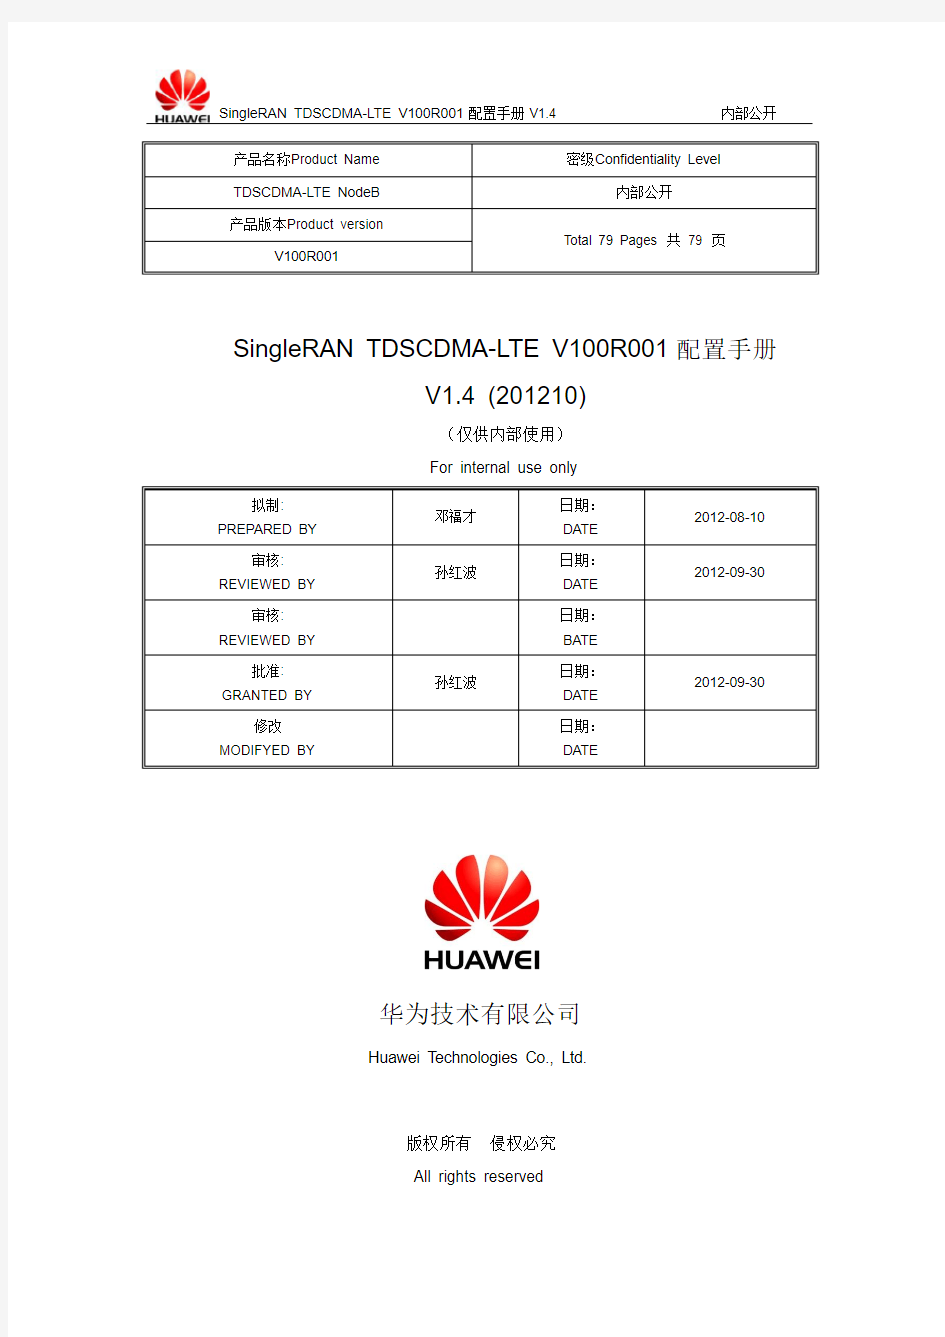 SingleRAN TDSCDMA-LTE V100R001配置手册V1.4(20121030)